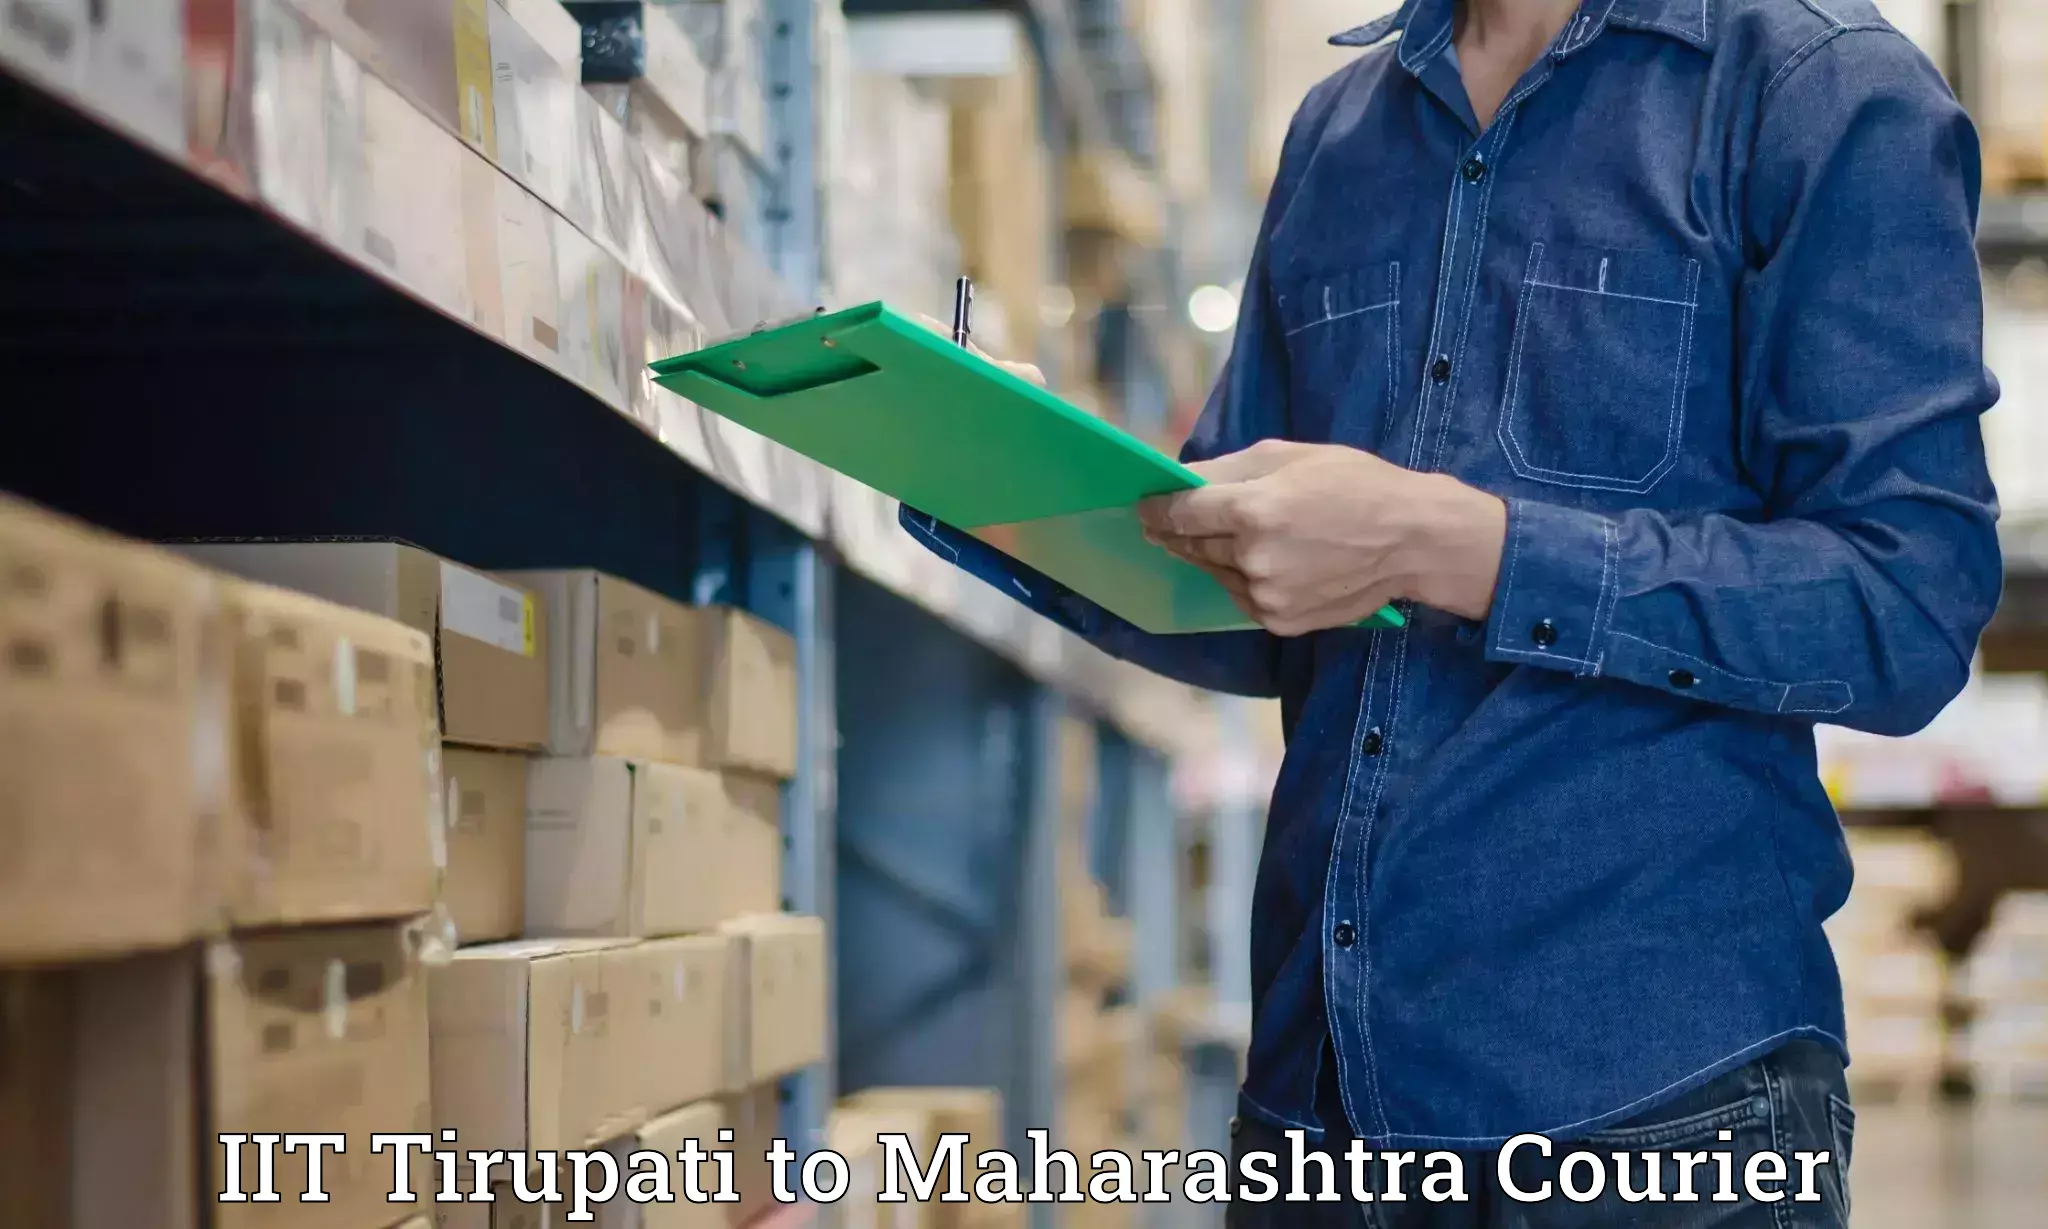 Global courier networks IIT Tirupati to Maharashtra